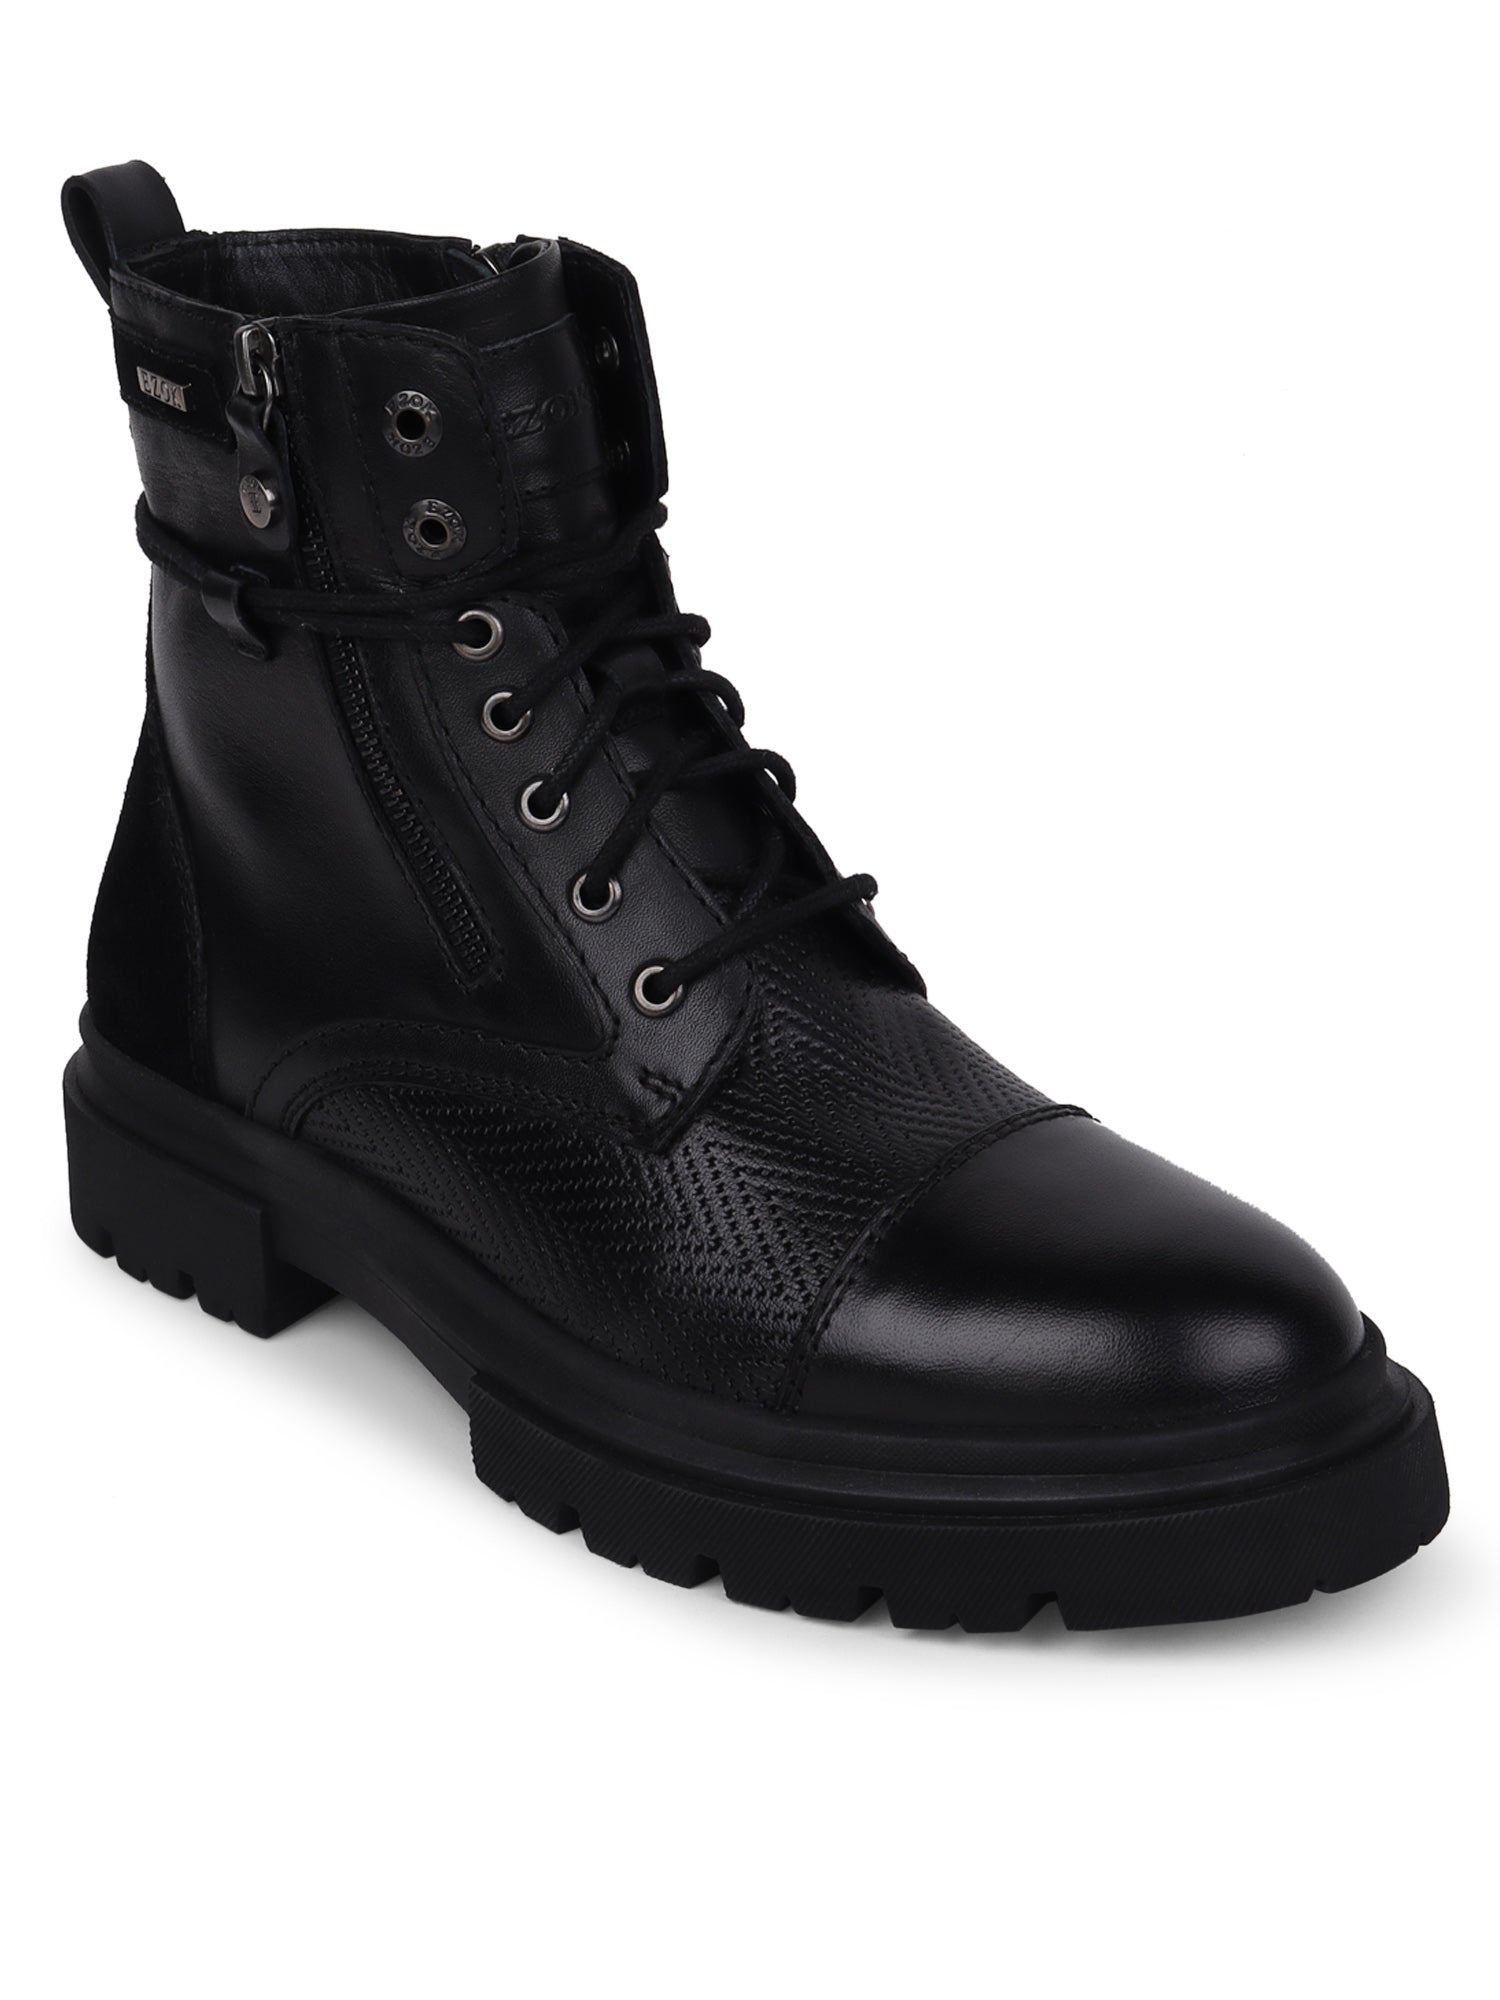 Special Forces Boots Men | Boot Shoes Men Military | Militar Boots Men Shoes  - Winter - Aliexpress